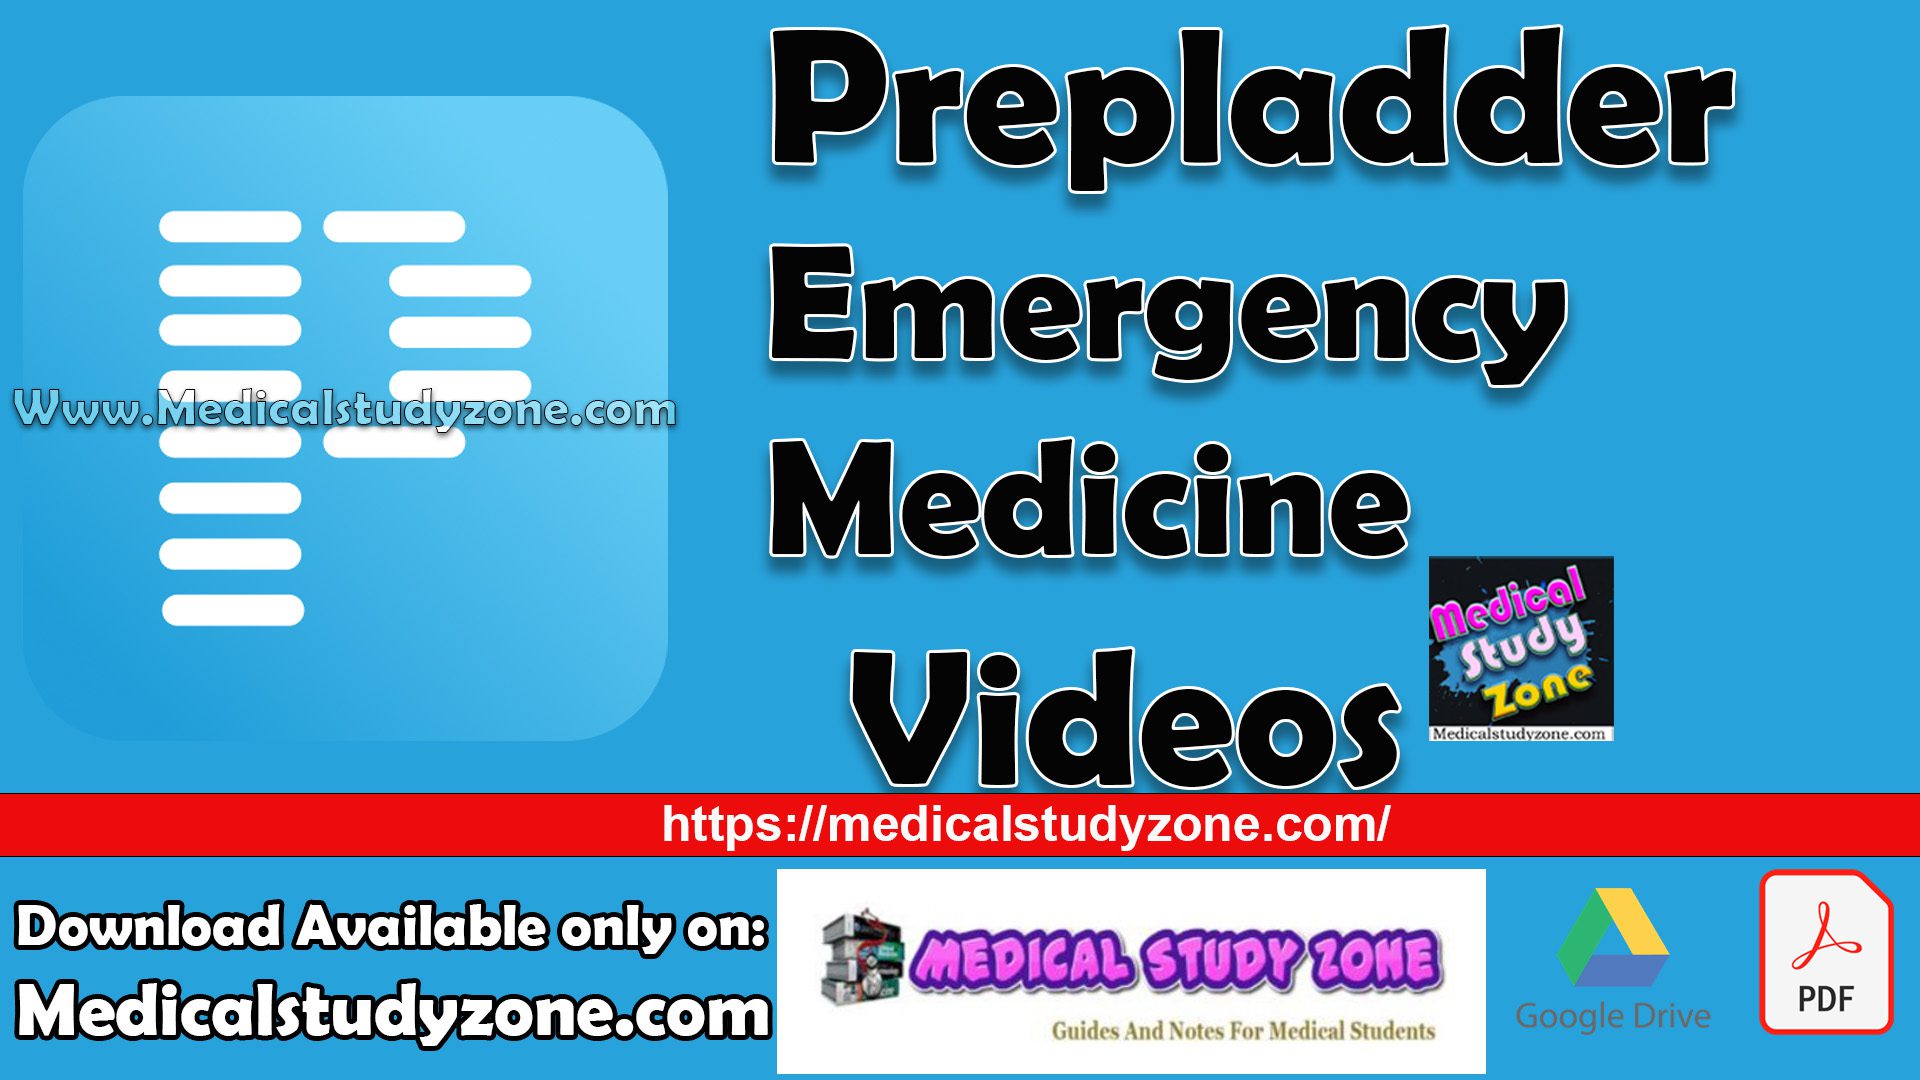 Prepladder Emergency Medicine Videos Free Download